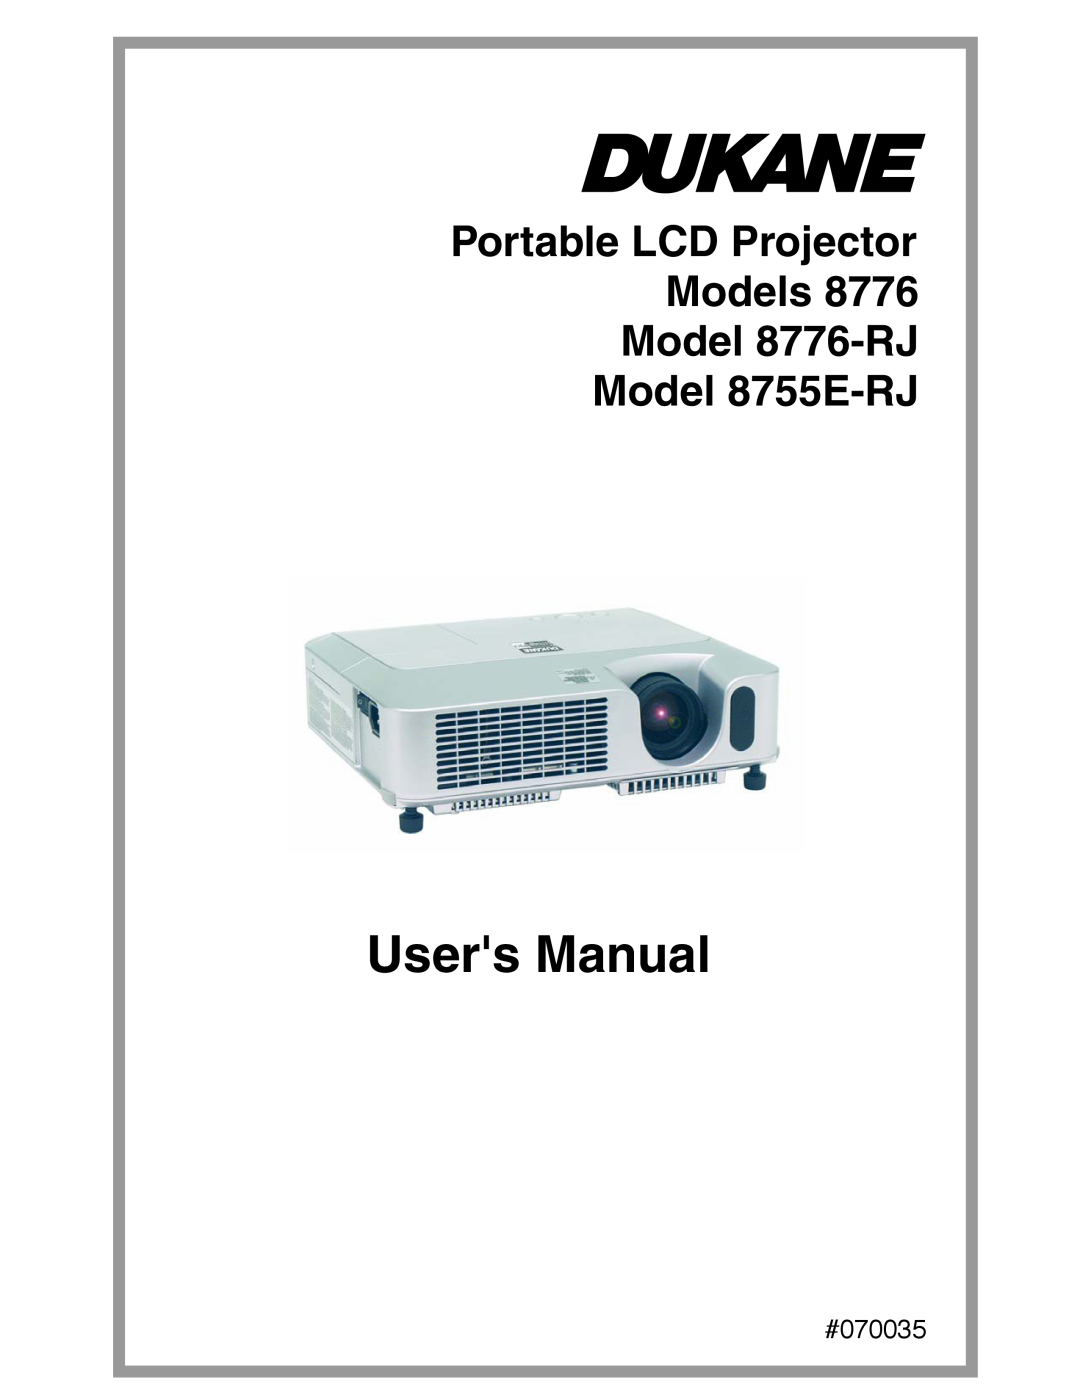 Dukane user manual Users Manual, Portable LCD Projector Models Model 8776-RJ Model 8755E-RJ, #070035 